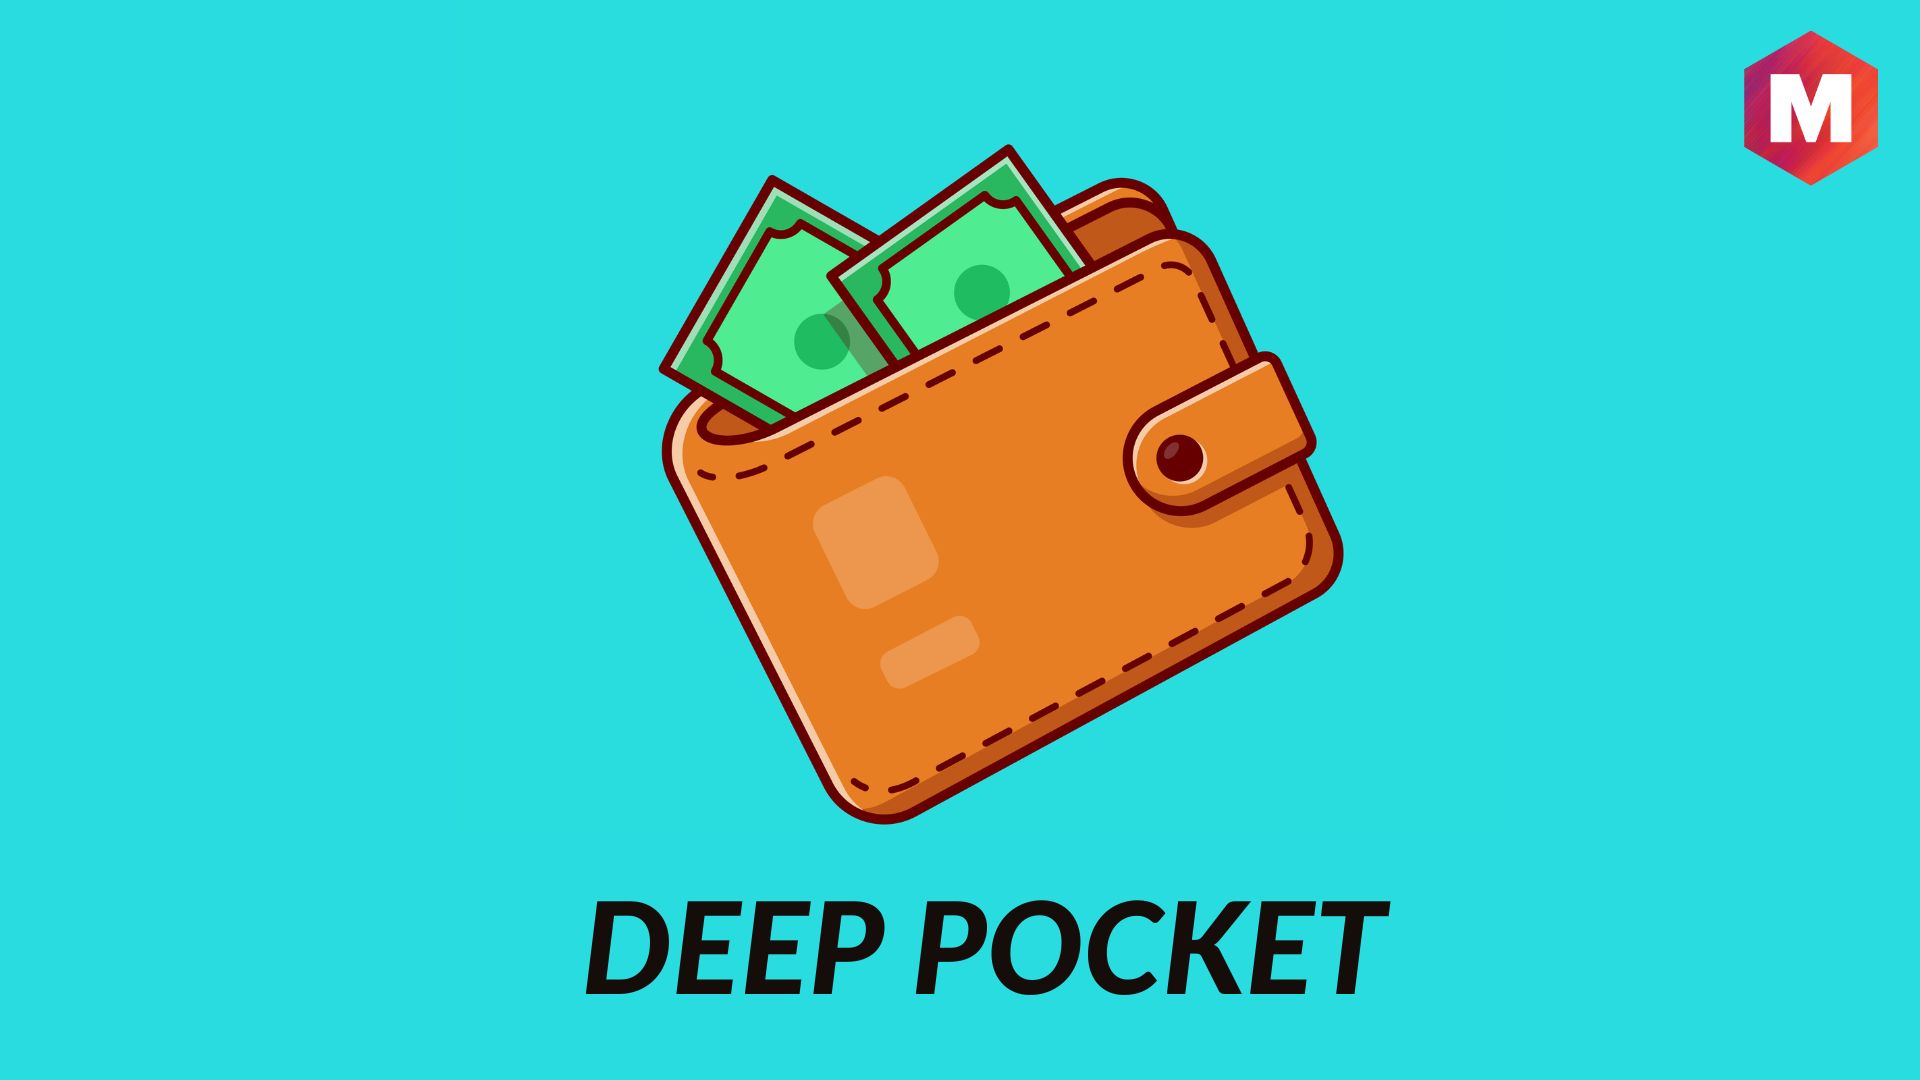 https://www.marketing91.com/wp-content/uploads/2022/06/Deep-pocket.jpg